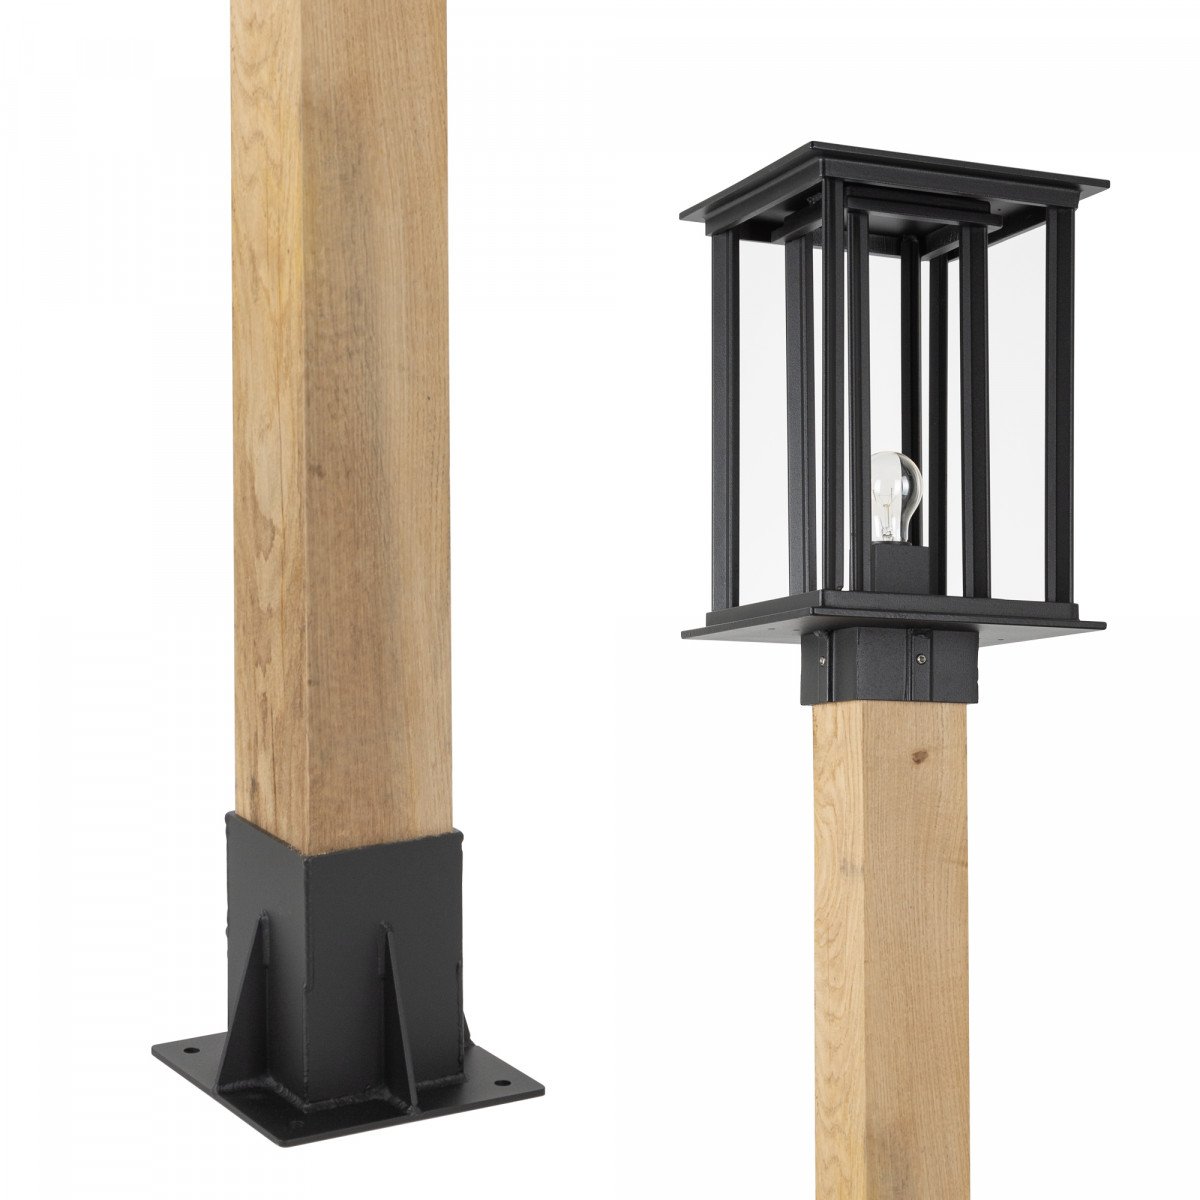 Strakke en moderne buitenlamp New York WOOD Lantaarn tuinlamp vierkant in de kleur zwart